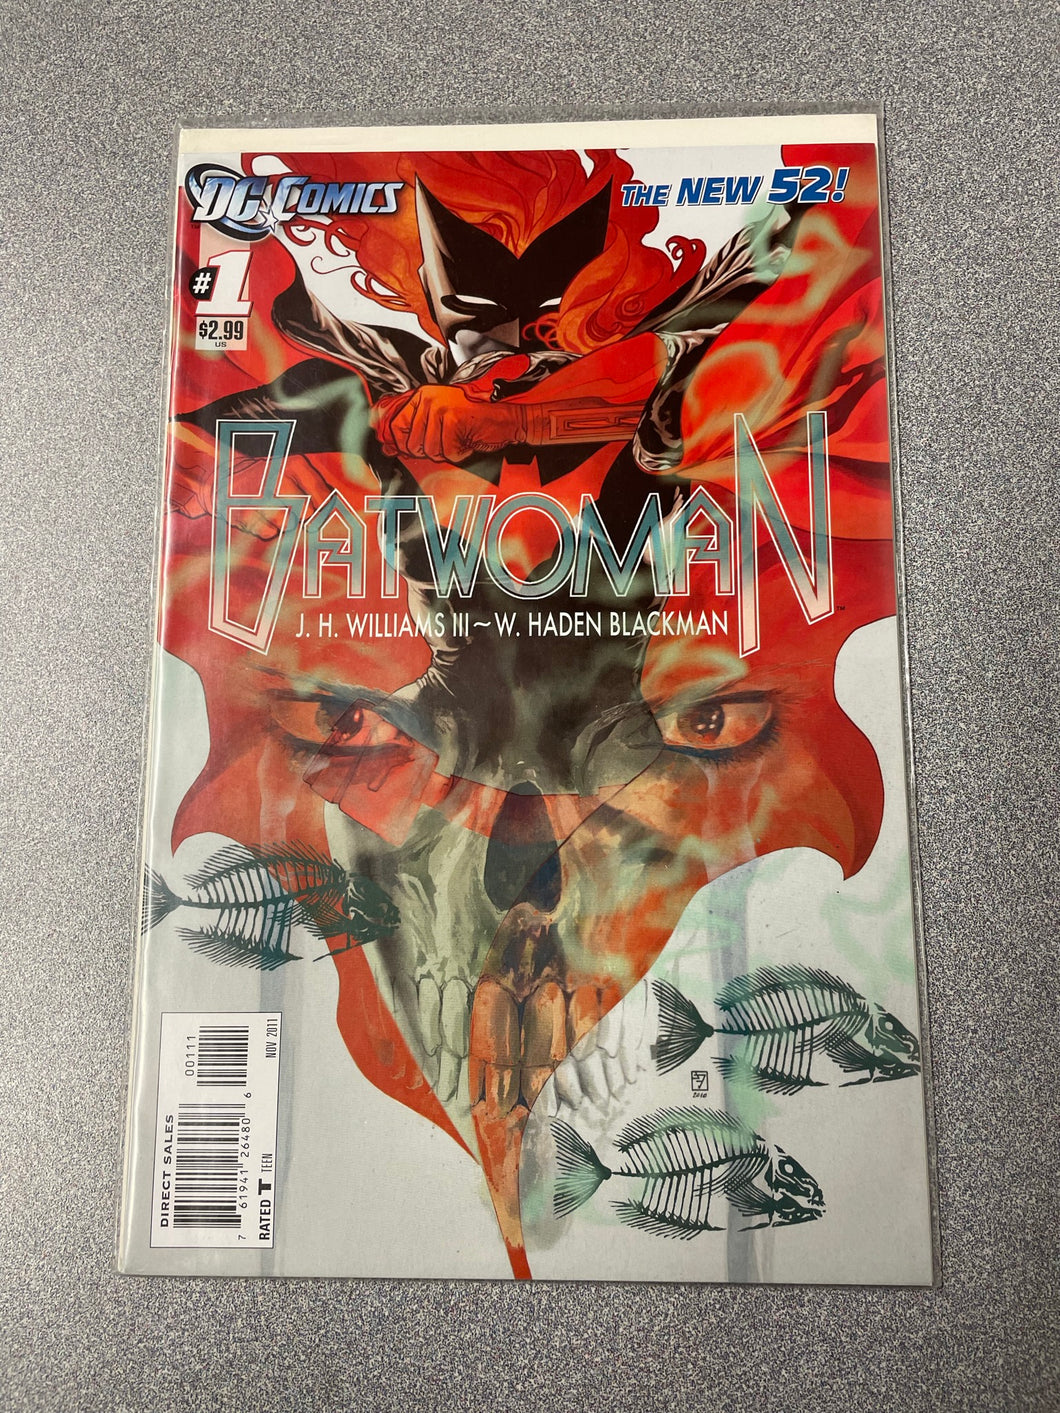 DC Comics the New 52: Batwoman #1, Williams J. H. and W. Haden Blackman[Nov. 2011] GN 1/23